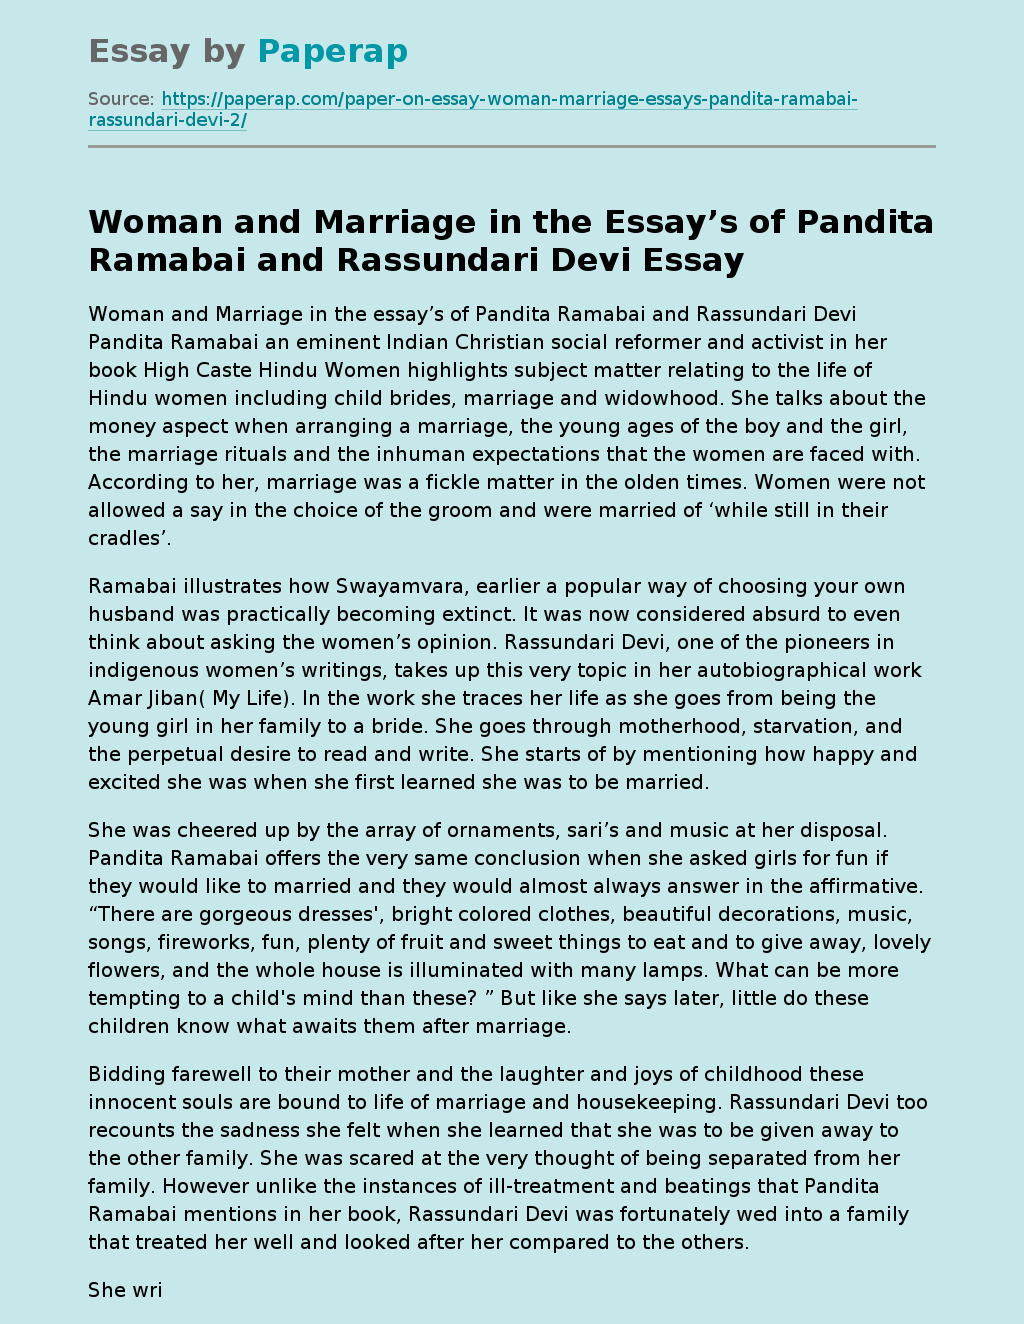 Woman and Marriage in the Essay’s of Pandita Ramabai and Rassundari Devi